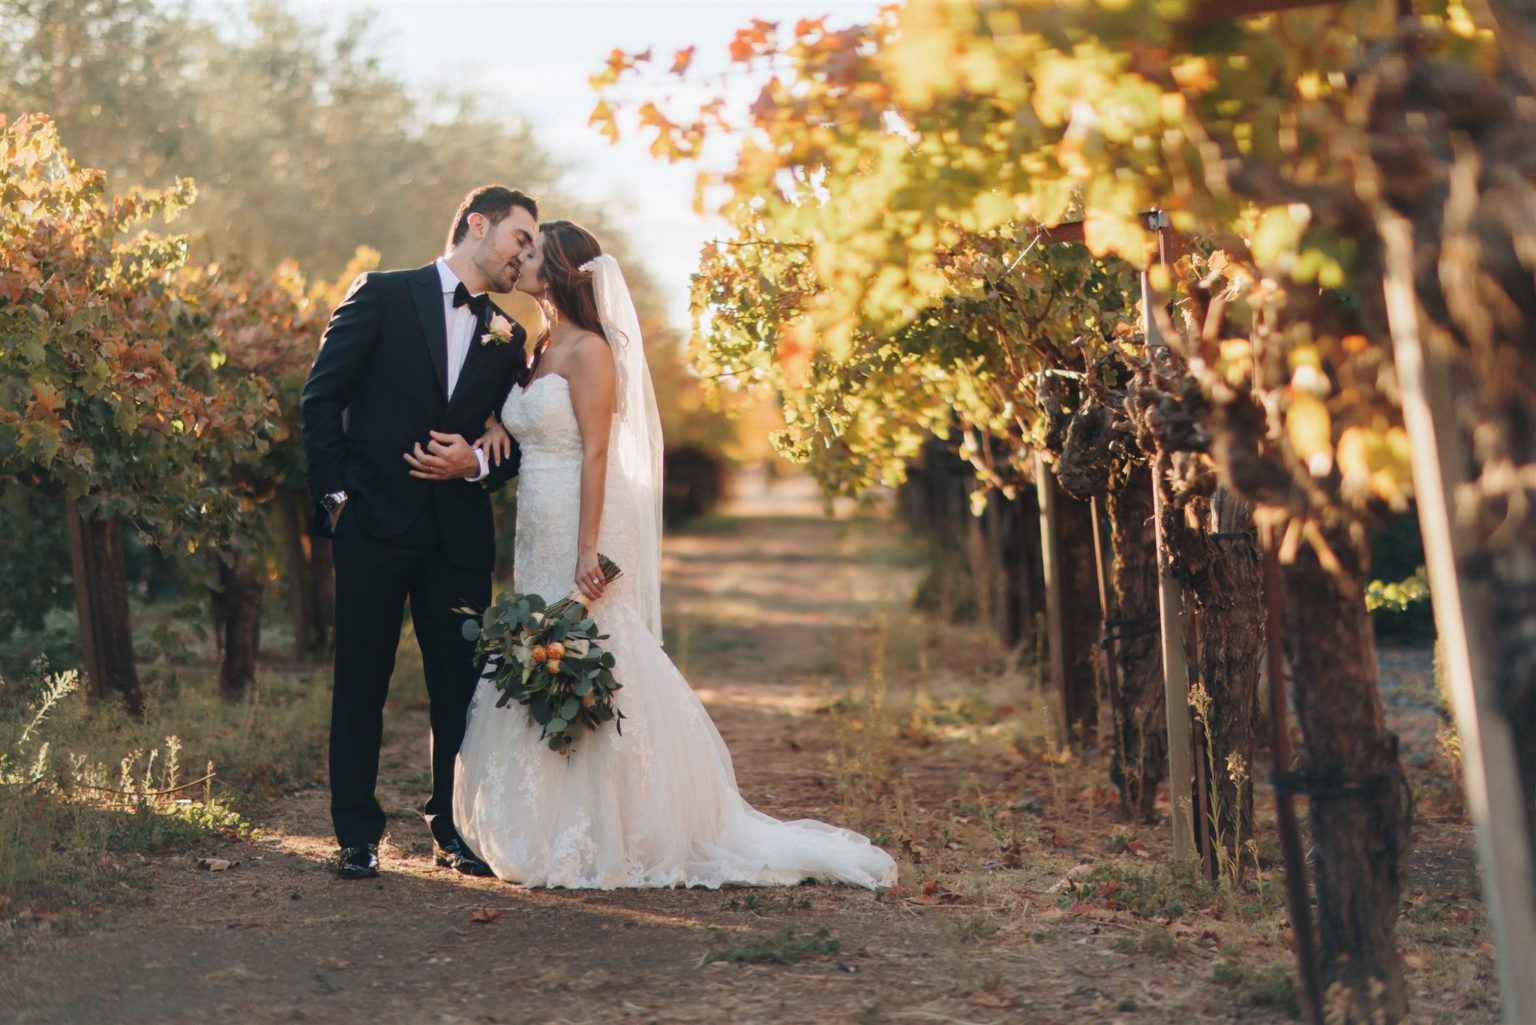 Couple kissing in vineyard